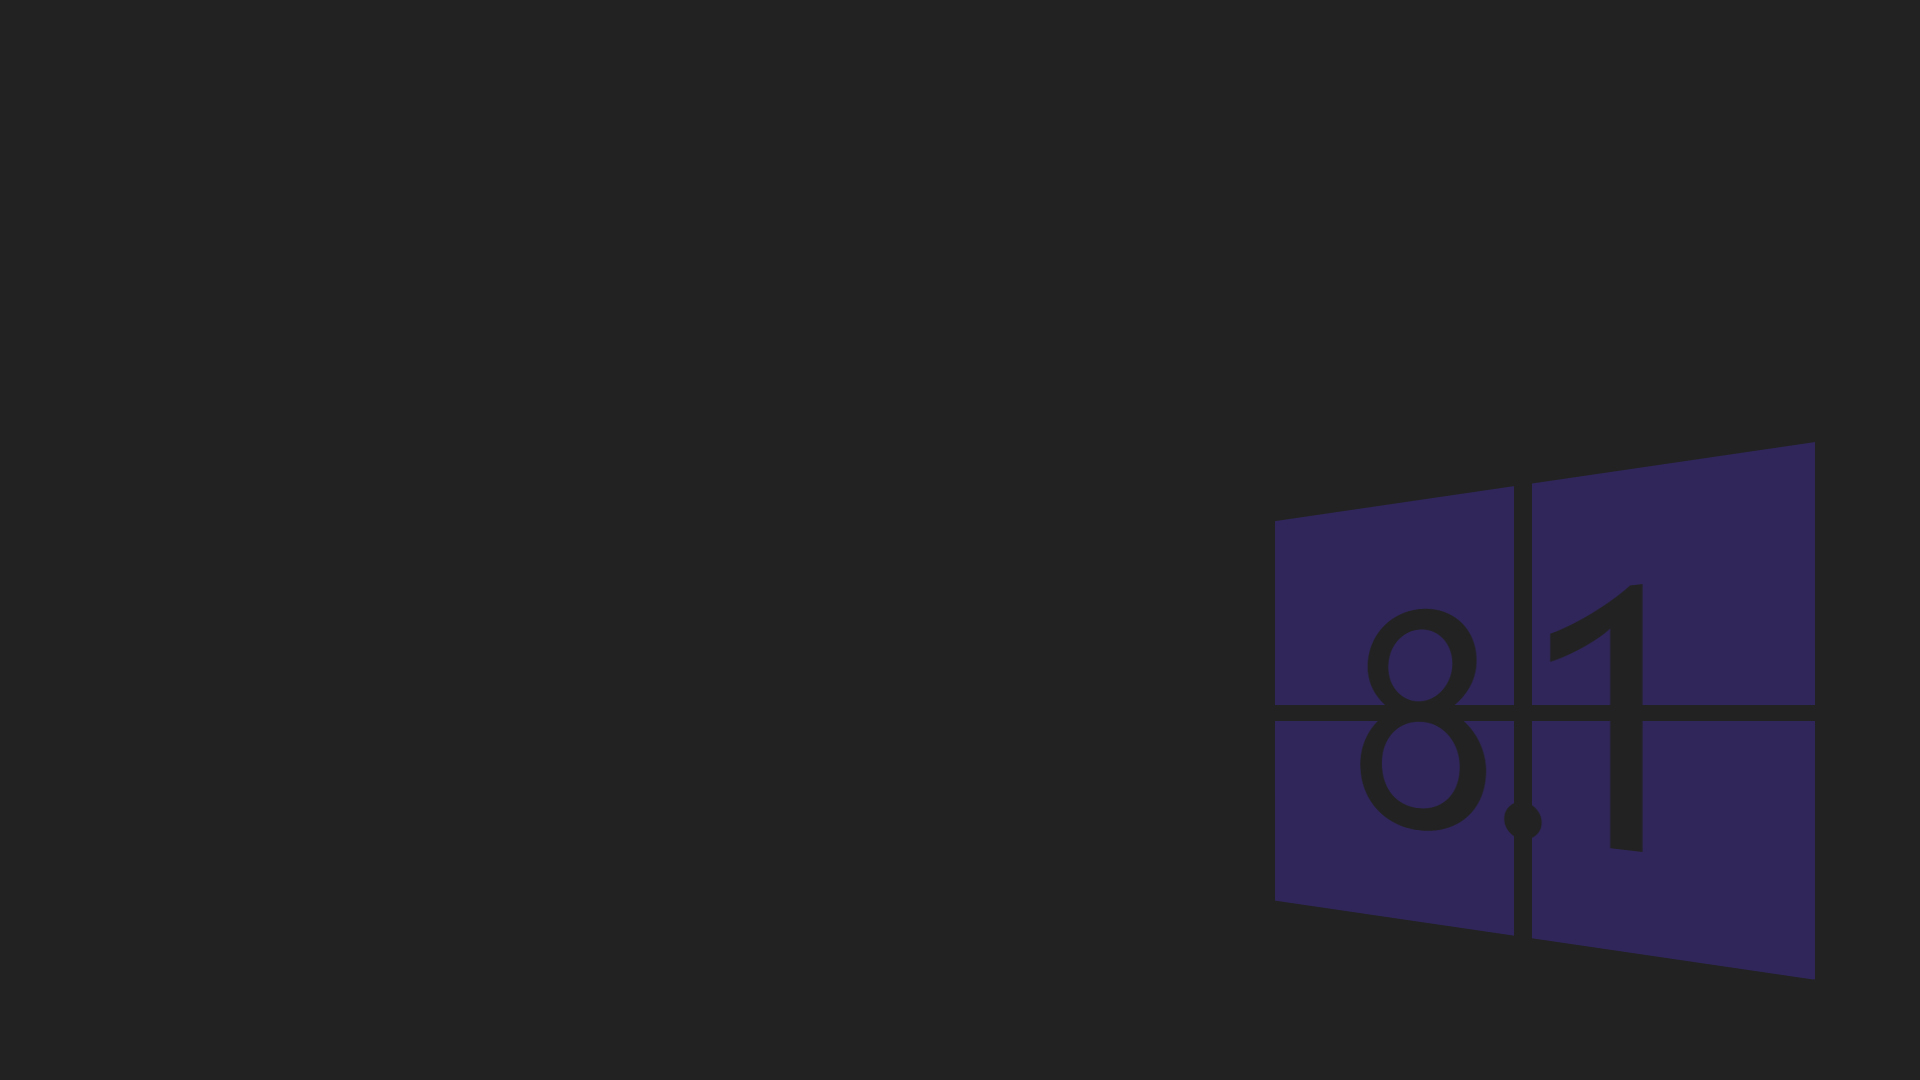 [33+] Windows 8.1 Wallpaper HD 1366x768 on WallpaperSafari